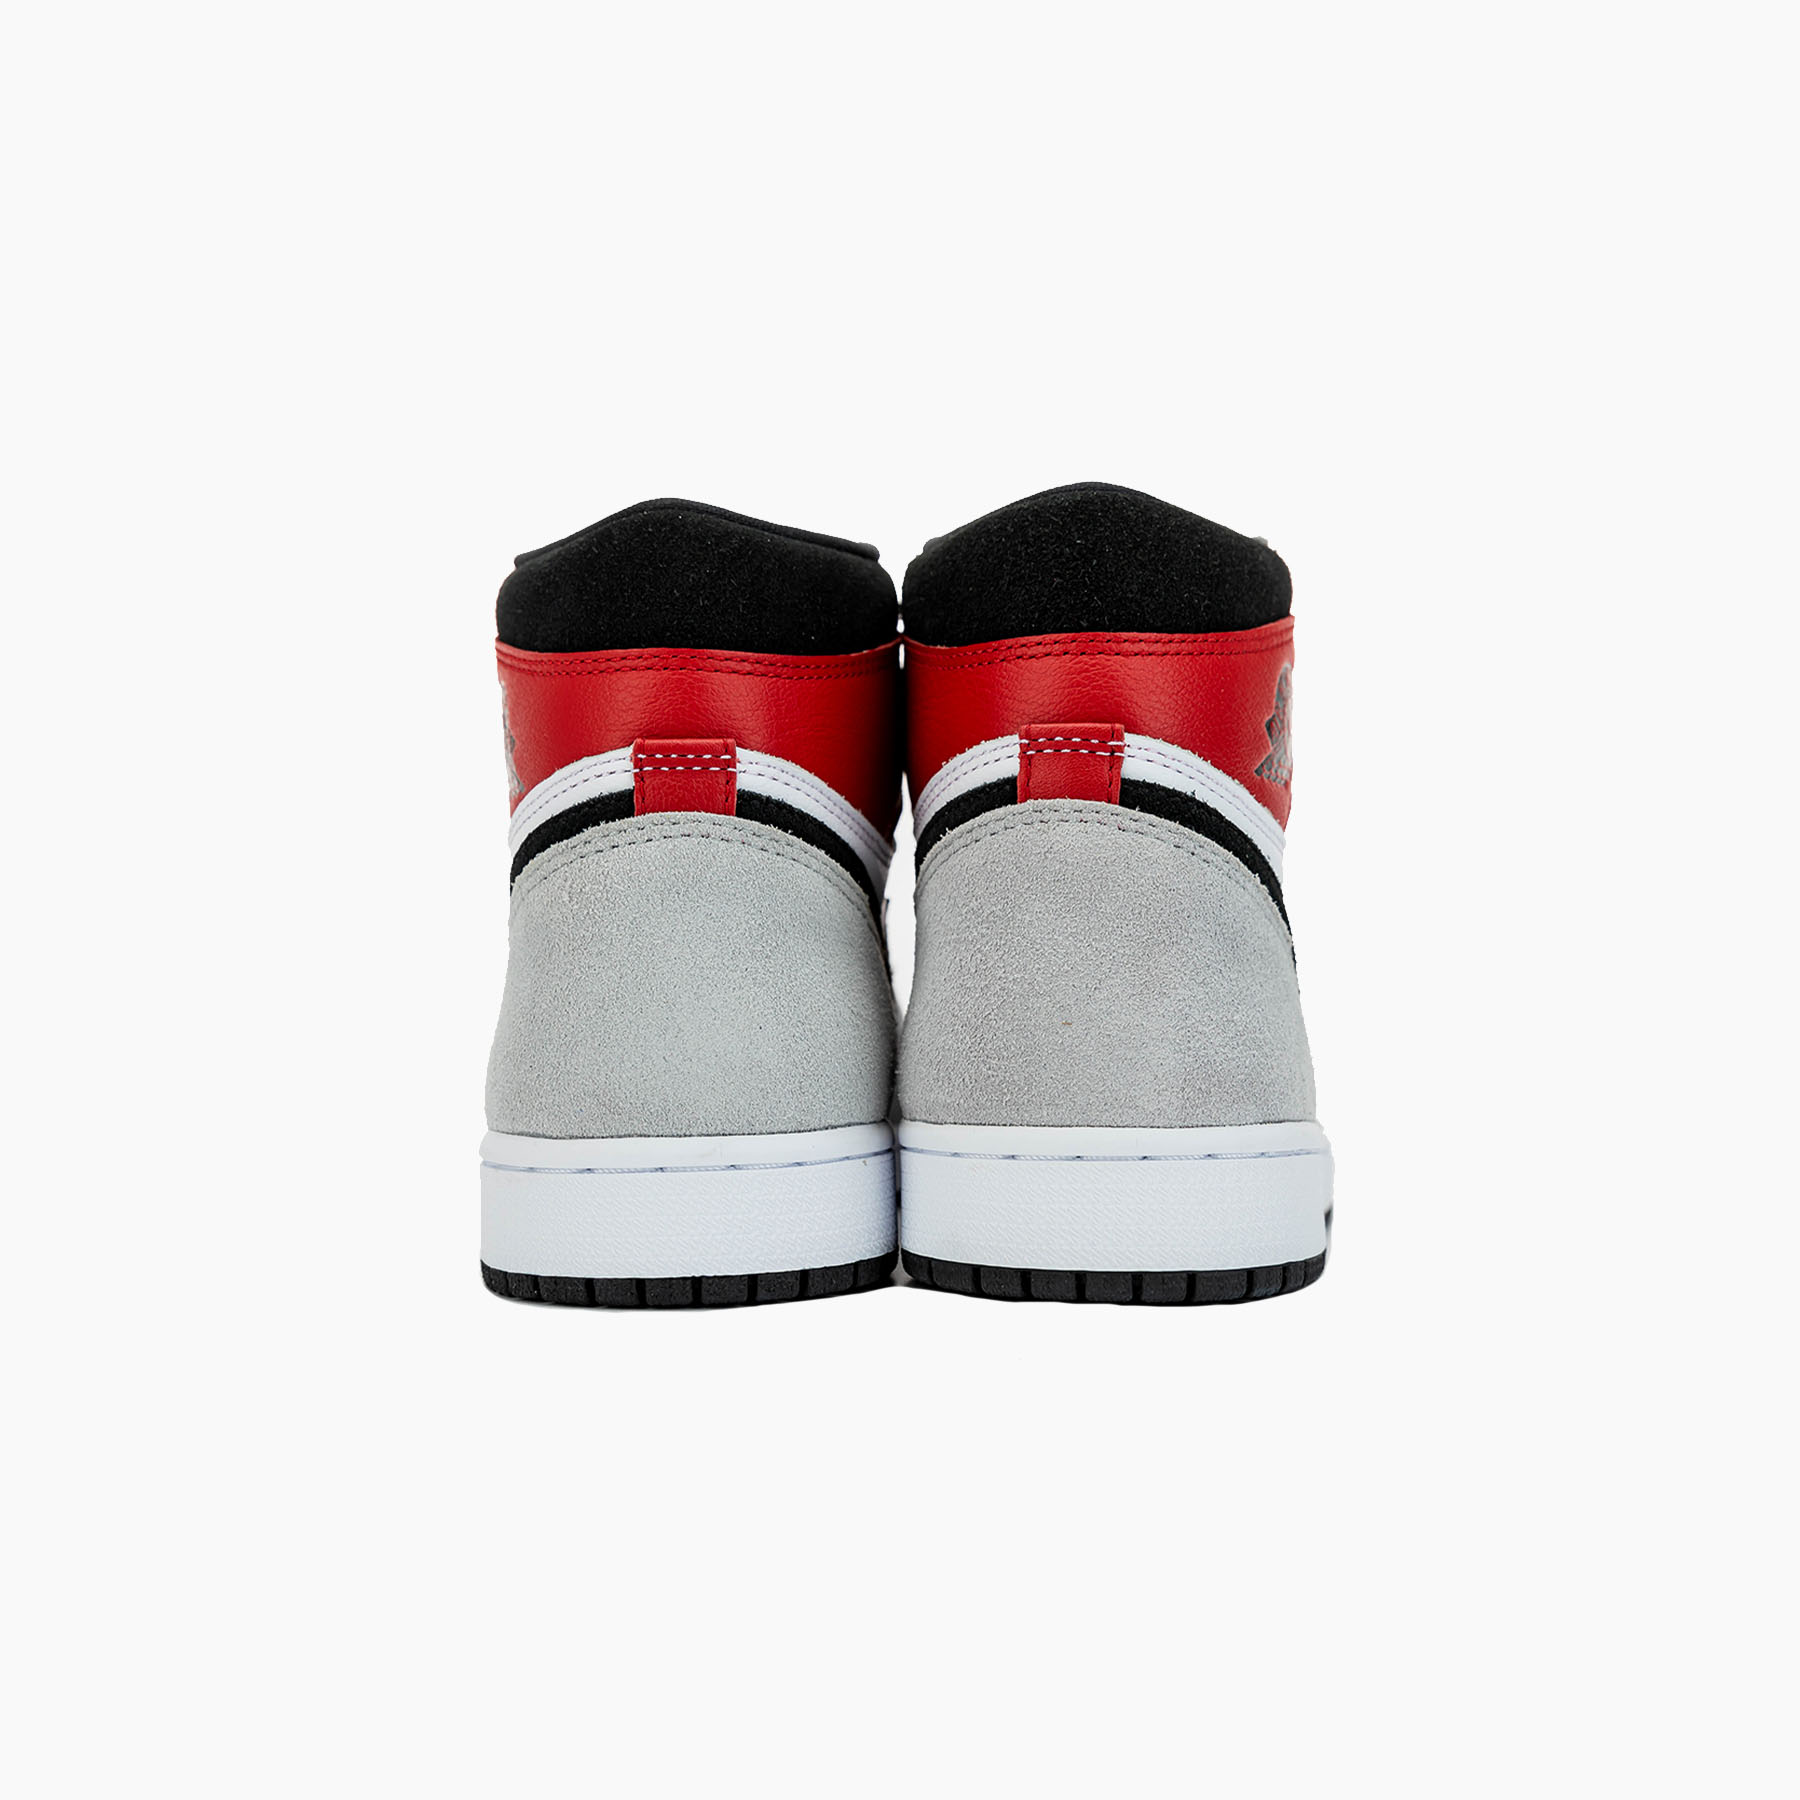 Air Jordan 1 Retro High OG Grey/Red Release